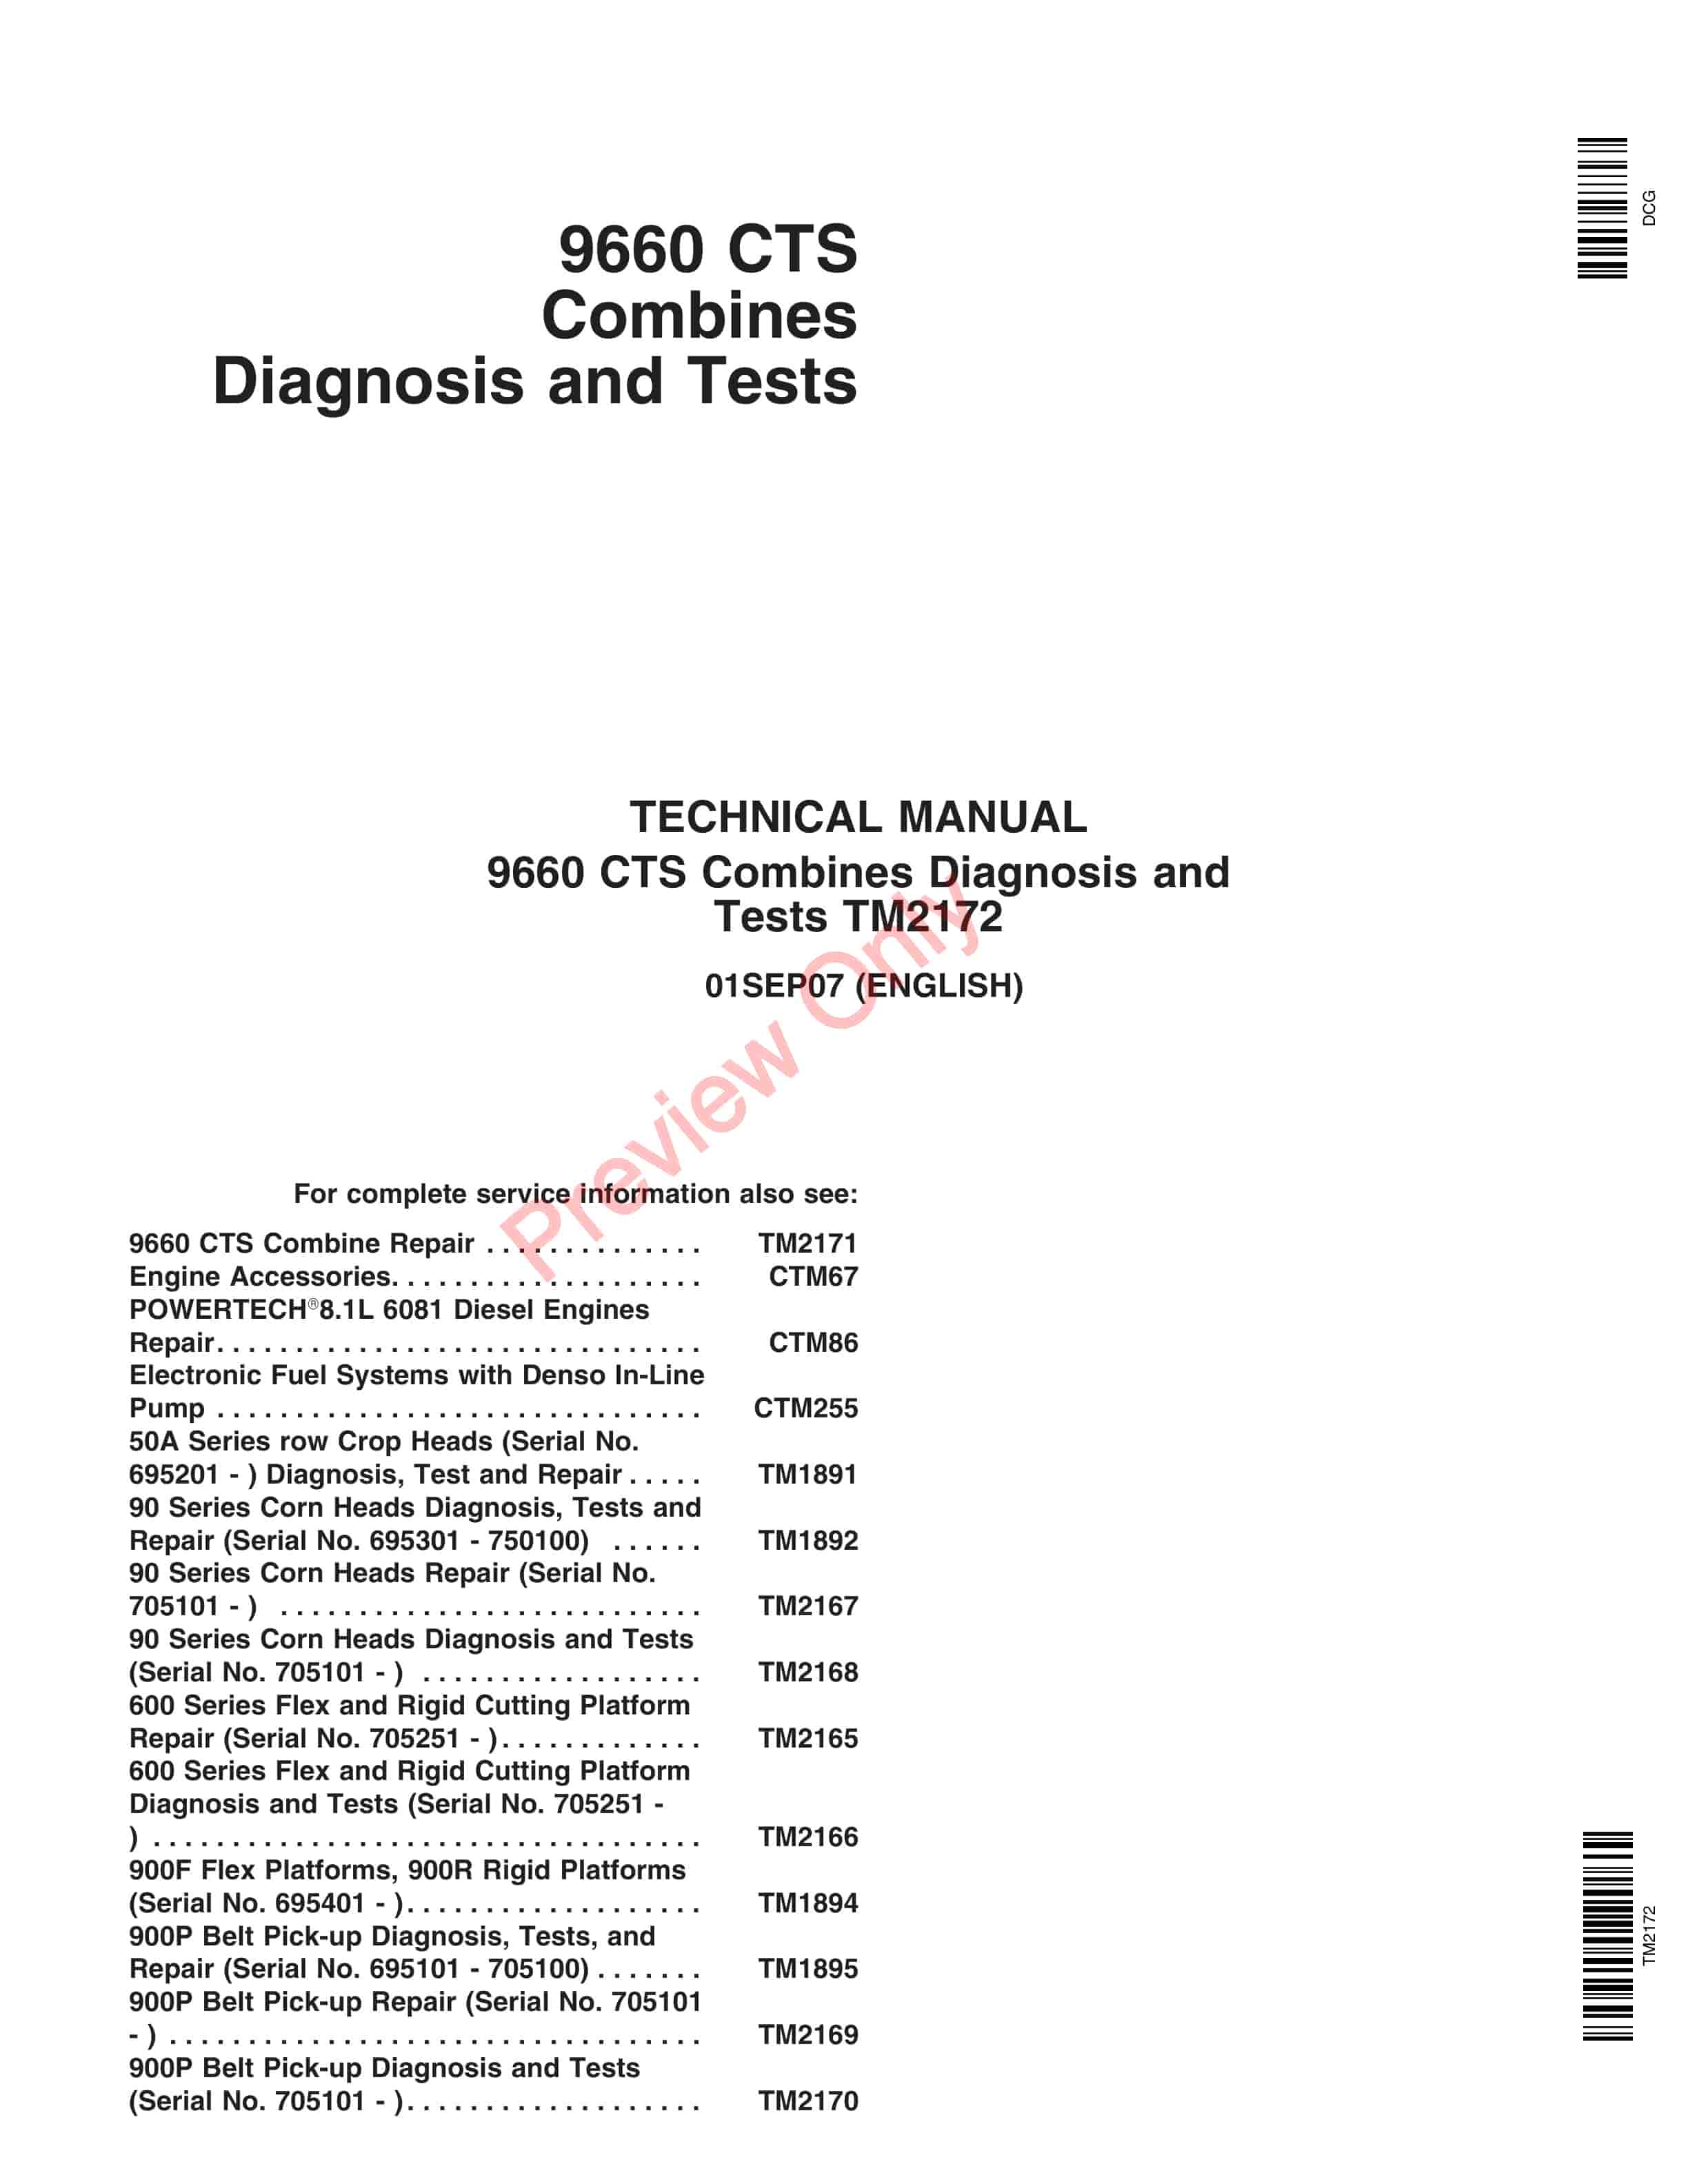 John Deere 9660 CTS Combine (705401-) Technical Manual TM2172 01SEP07-1